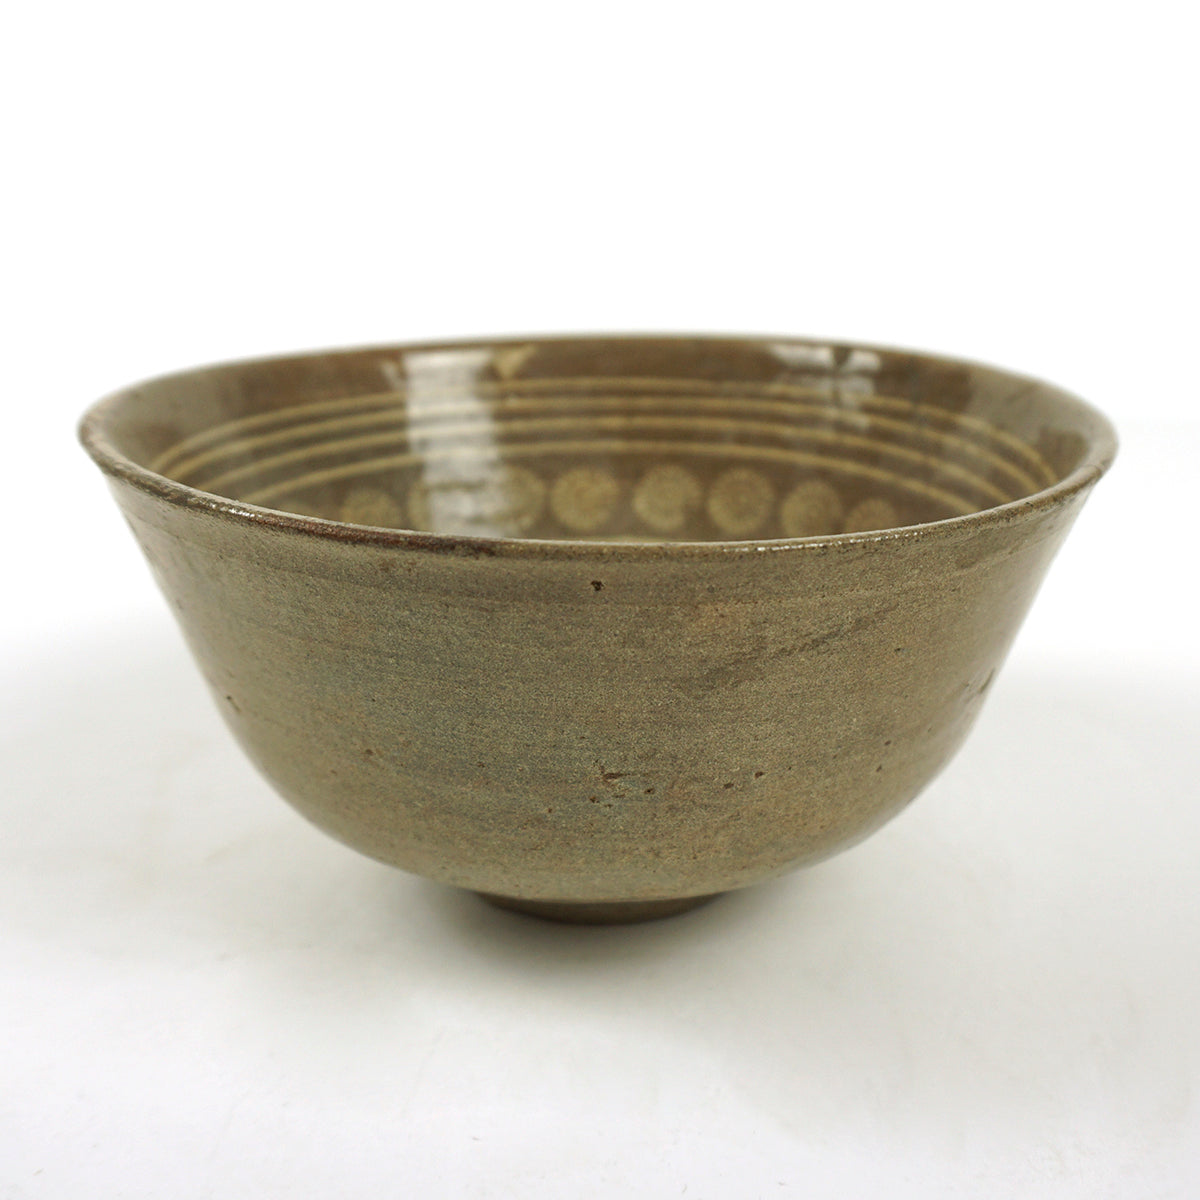 Chosun Inlaid Bunchung Bowl